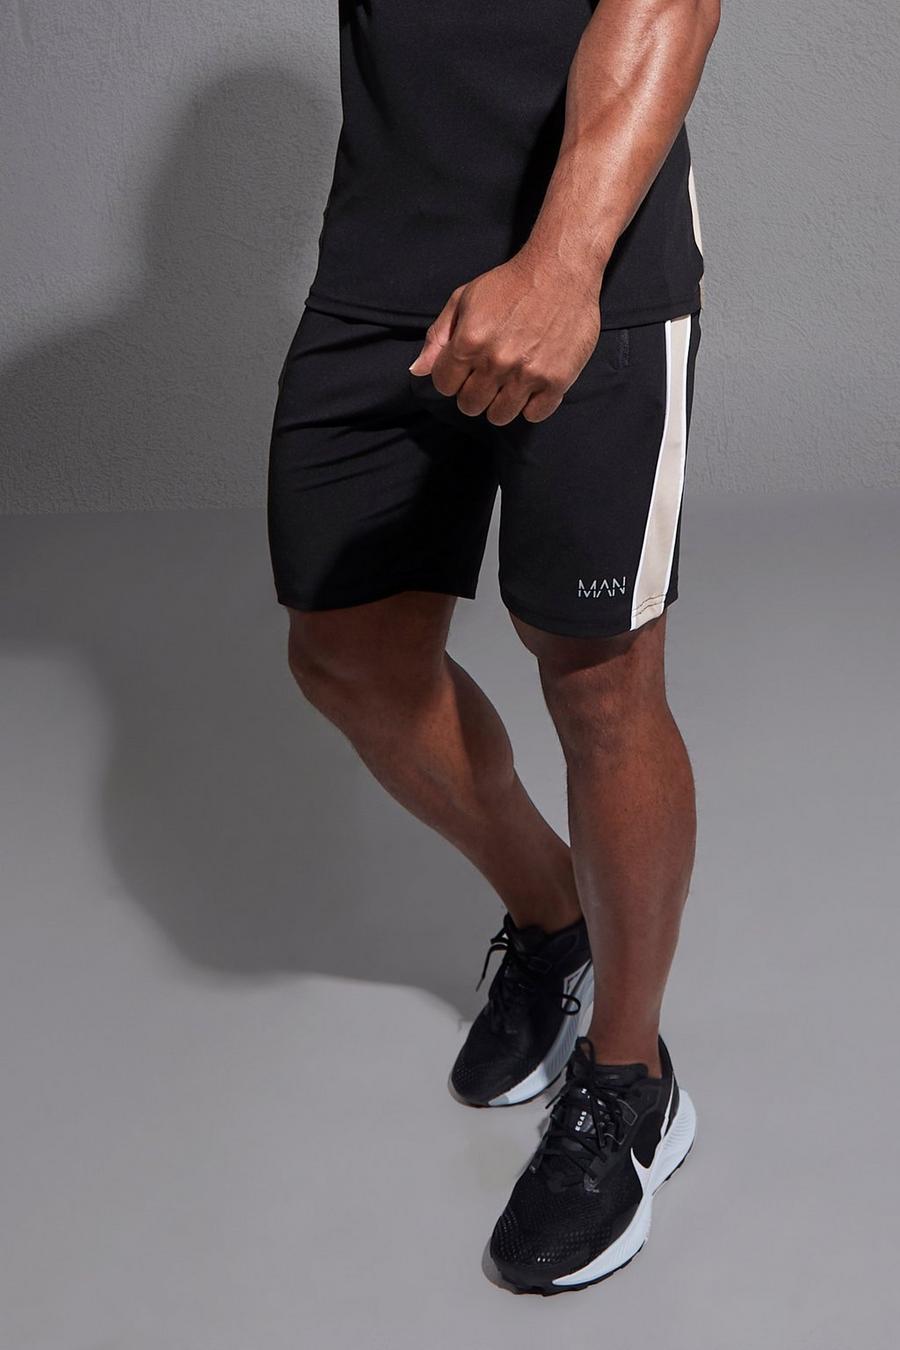 Pantalón corto MAN Active con franja lateral, Black negro image number 1